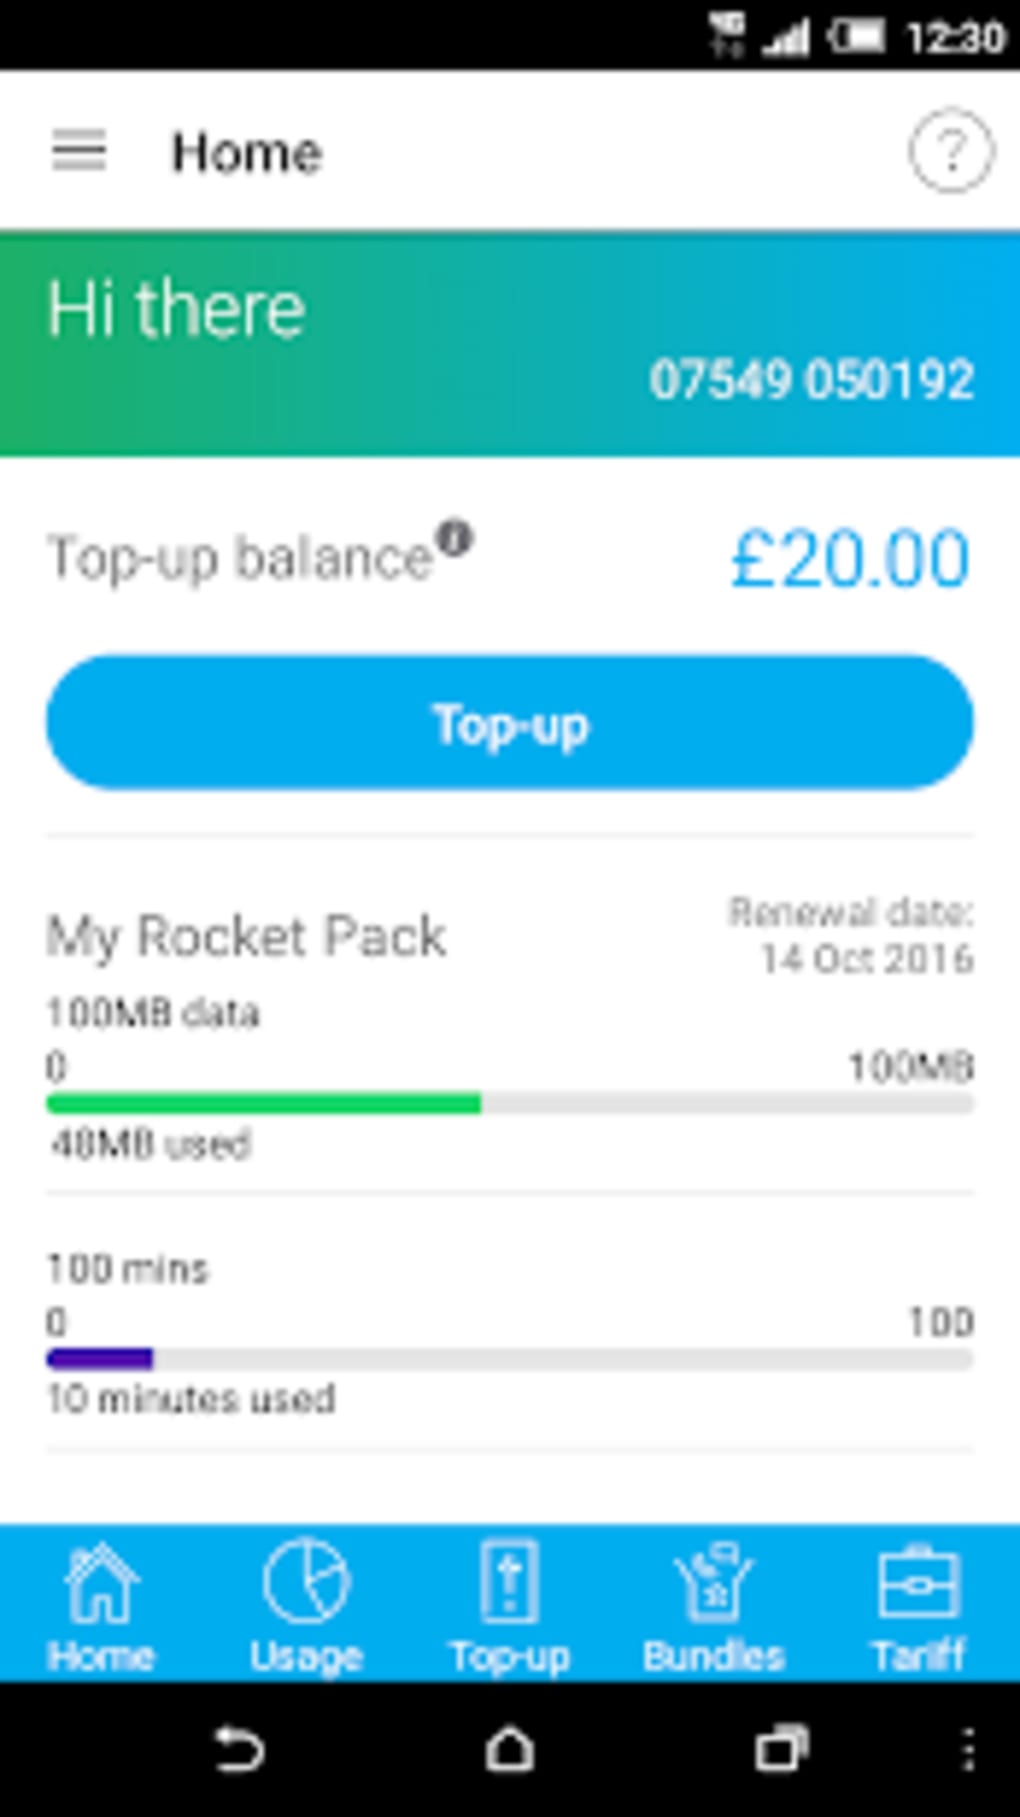 Tesco Mobile Pay As You Go APK for -